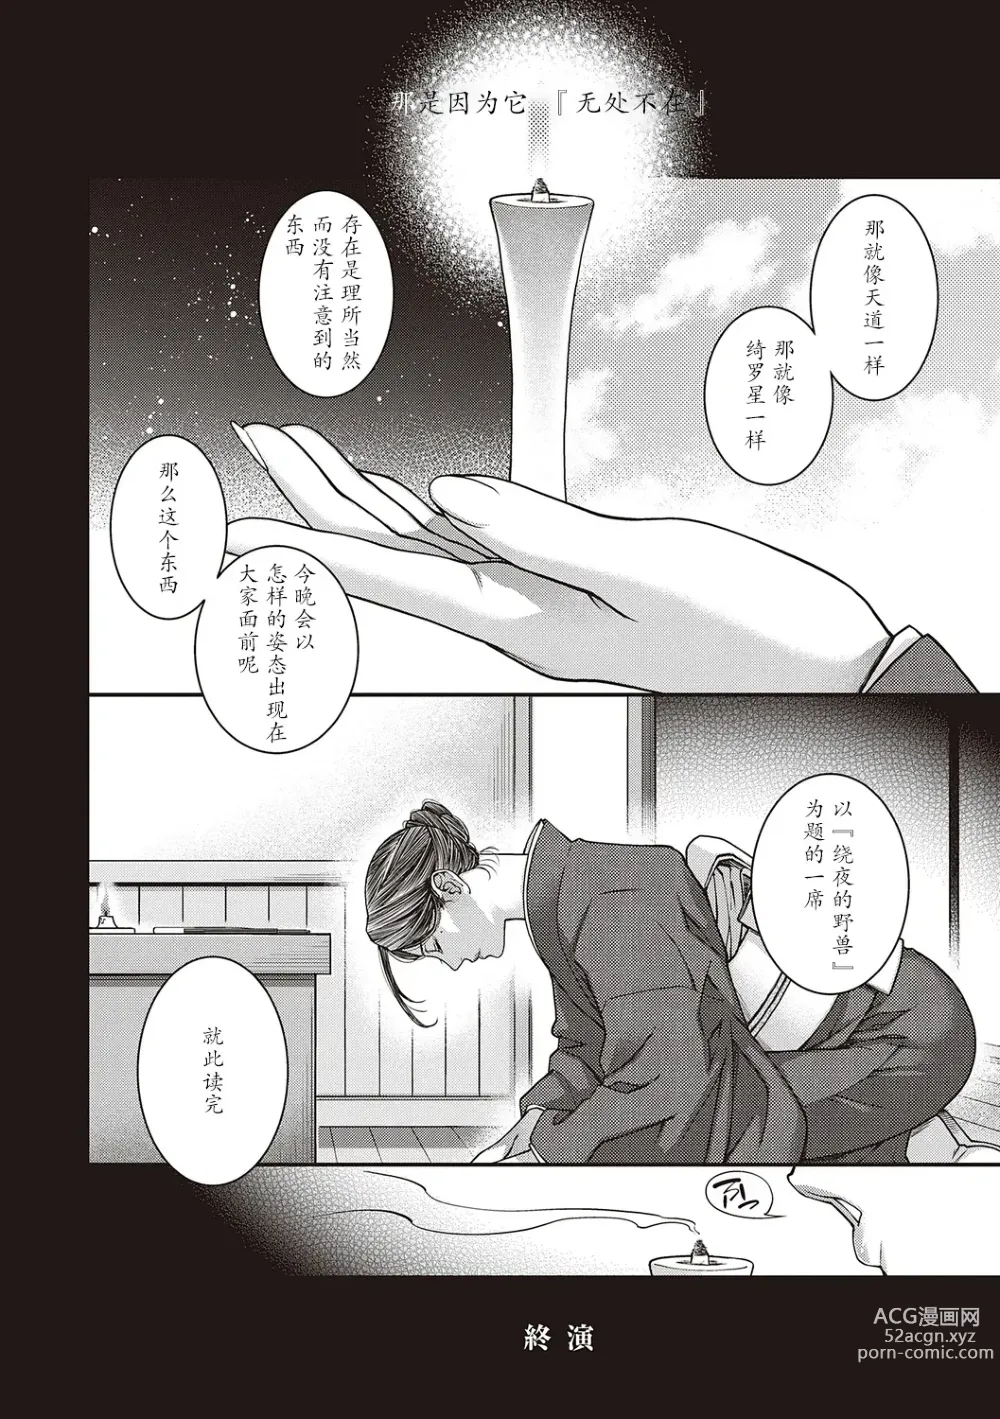 Page 8 of manga 彼誰時家族会議  演目『廻夜のケモノ』